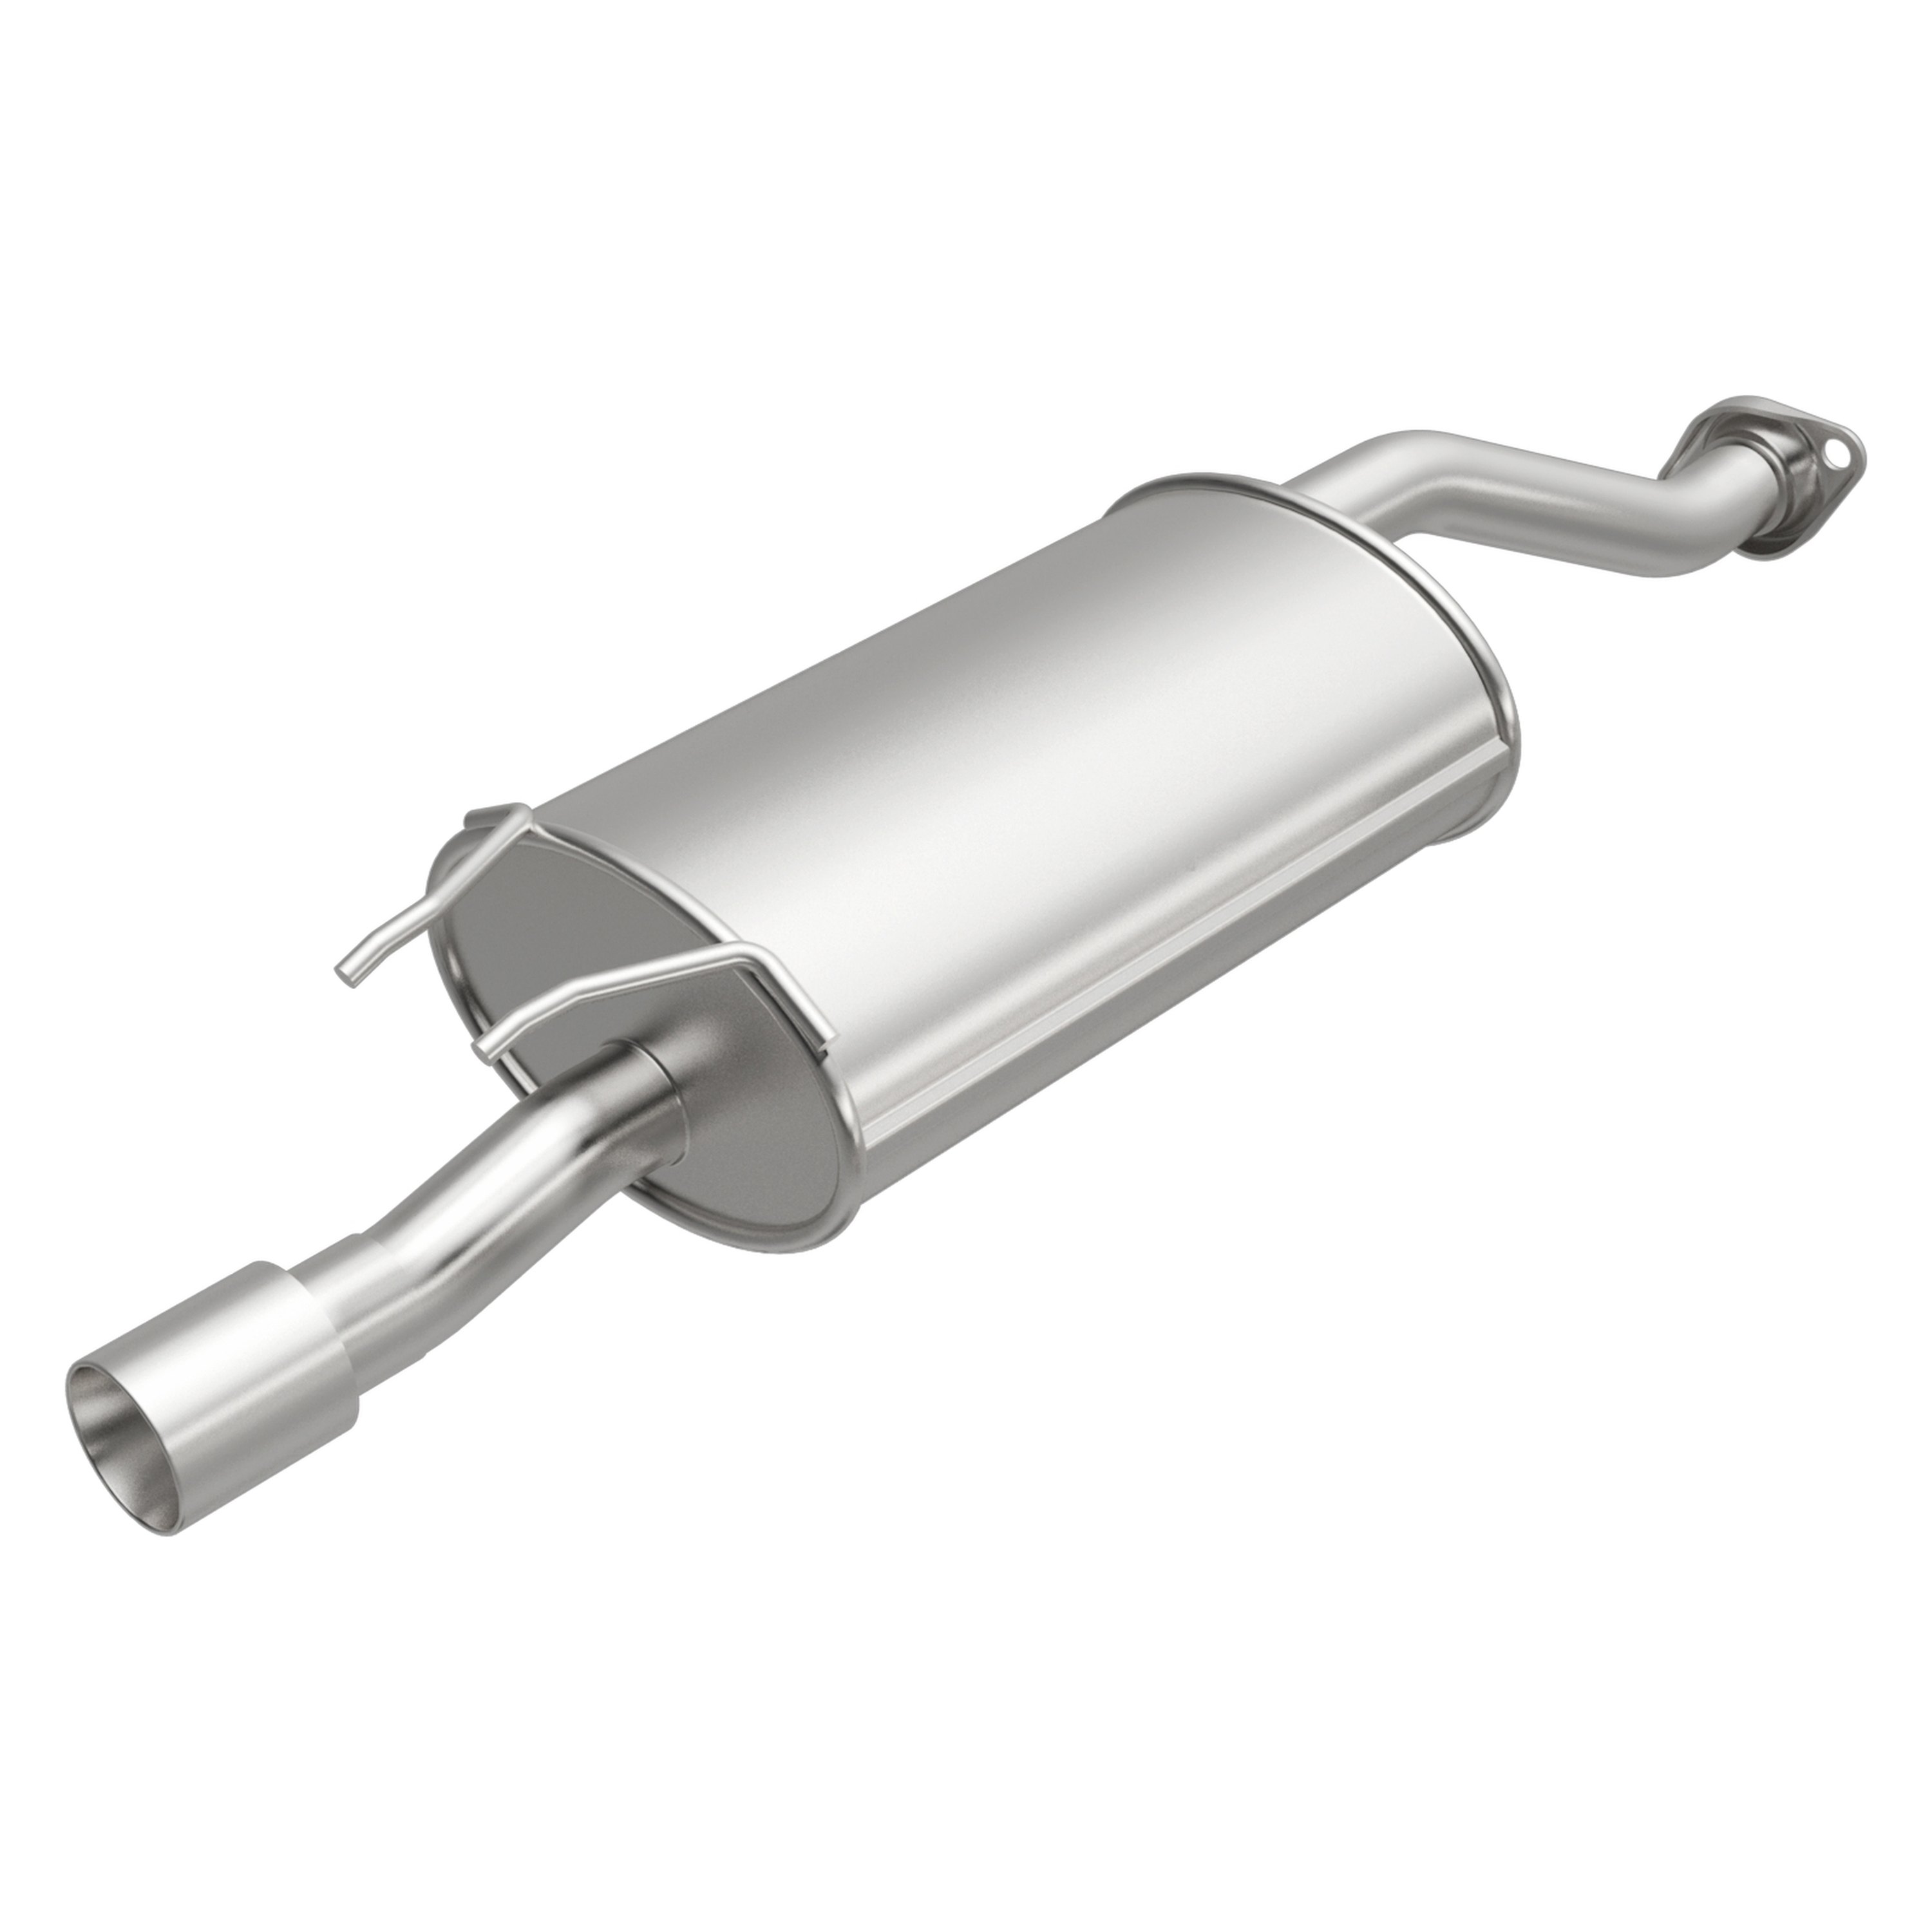 Resonator Muffler Pipe Exhaust System Kit fits 2006-2011 Honda Civic Hybrid 1.3L 